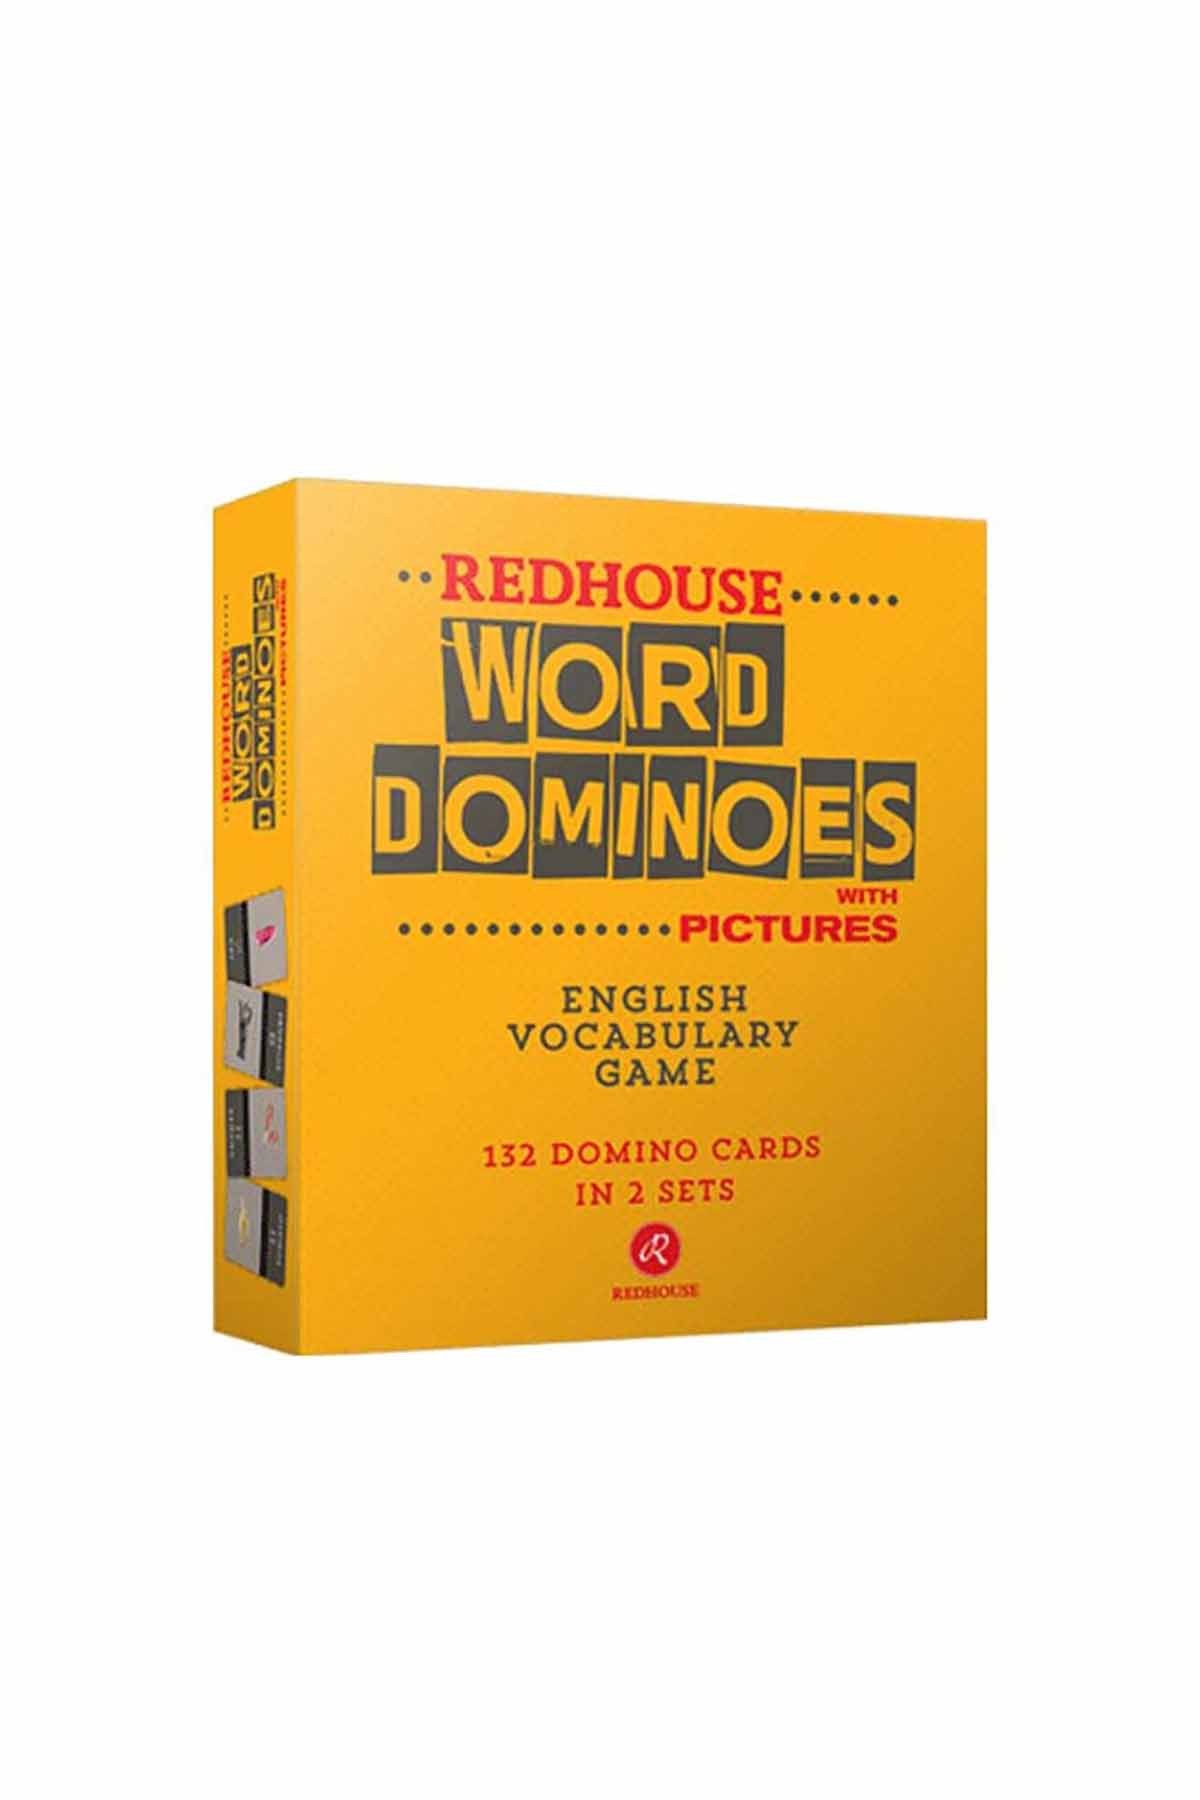 Redhouse Word Dominoes with Pictures - Domino ile Resimli Sözcük Oyunu